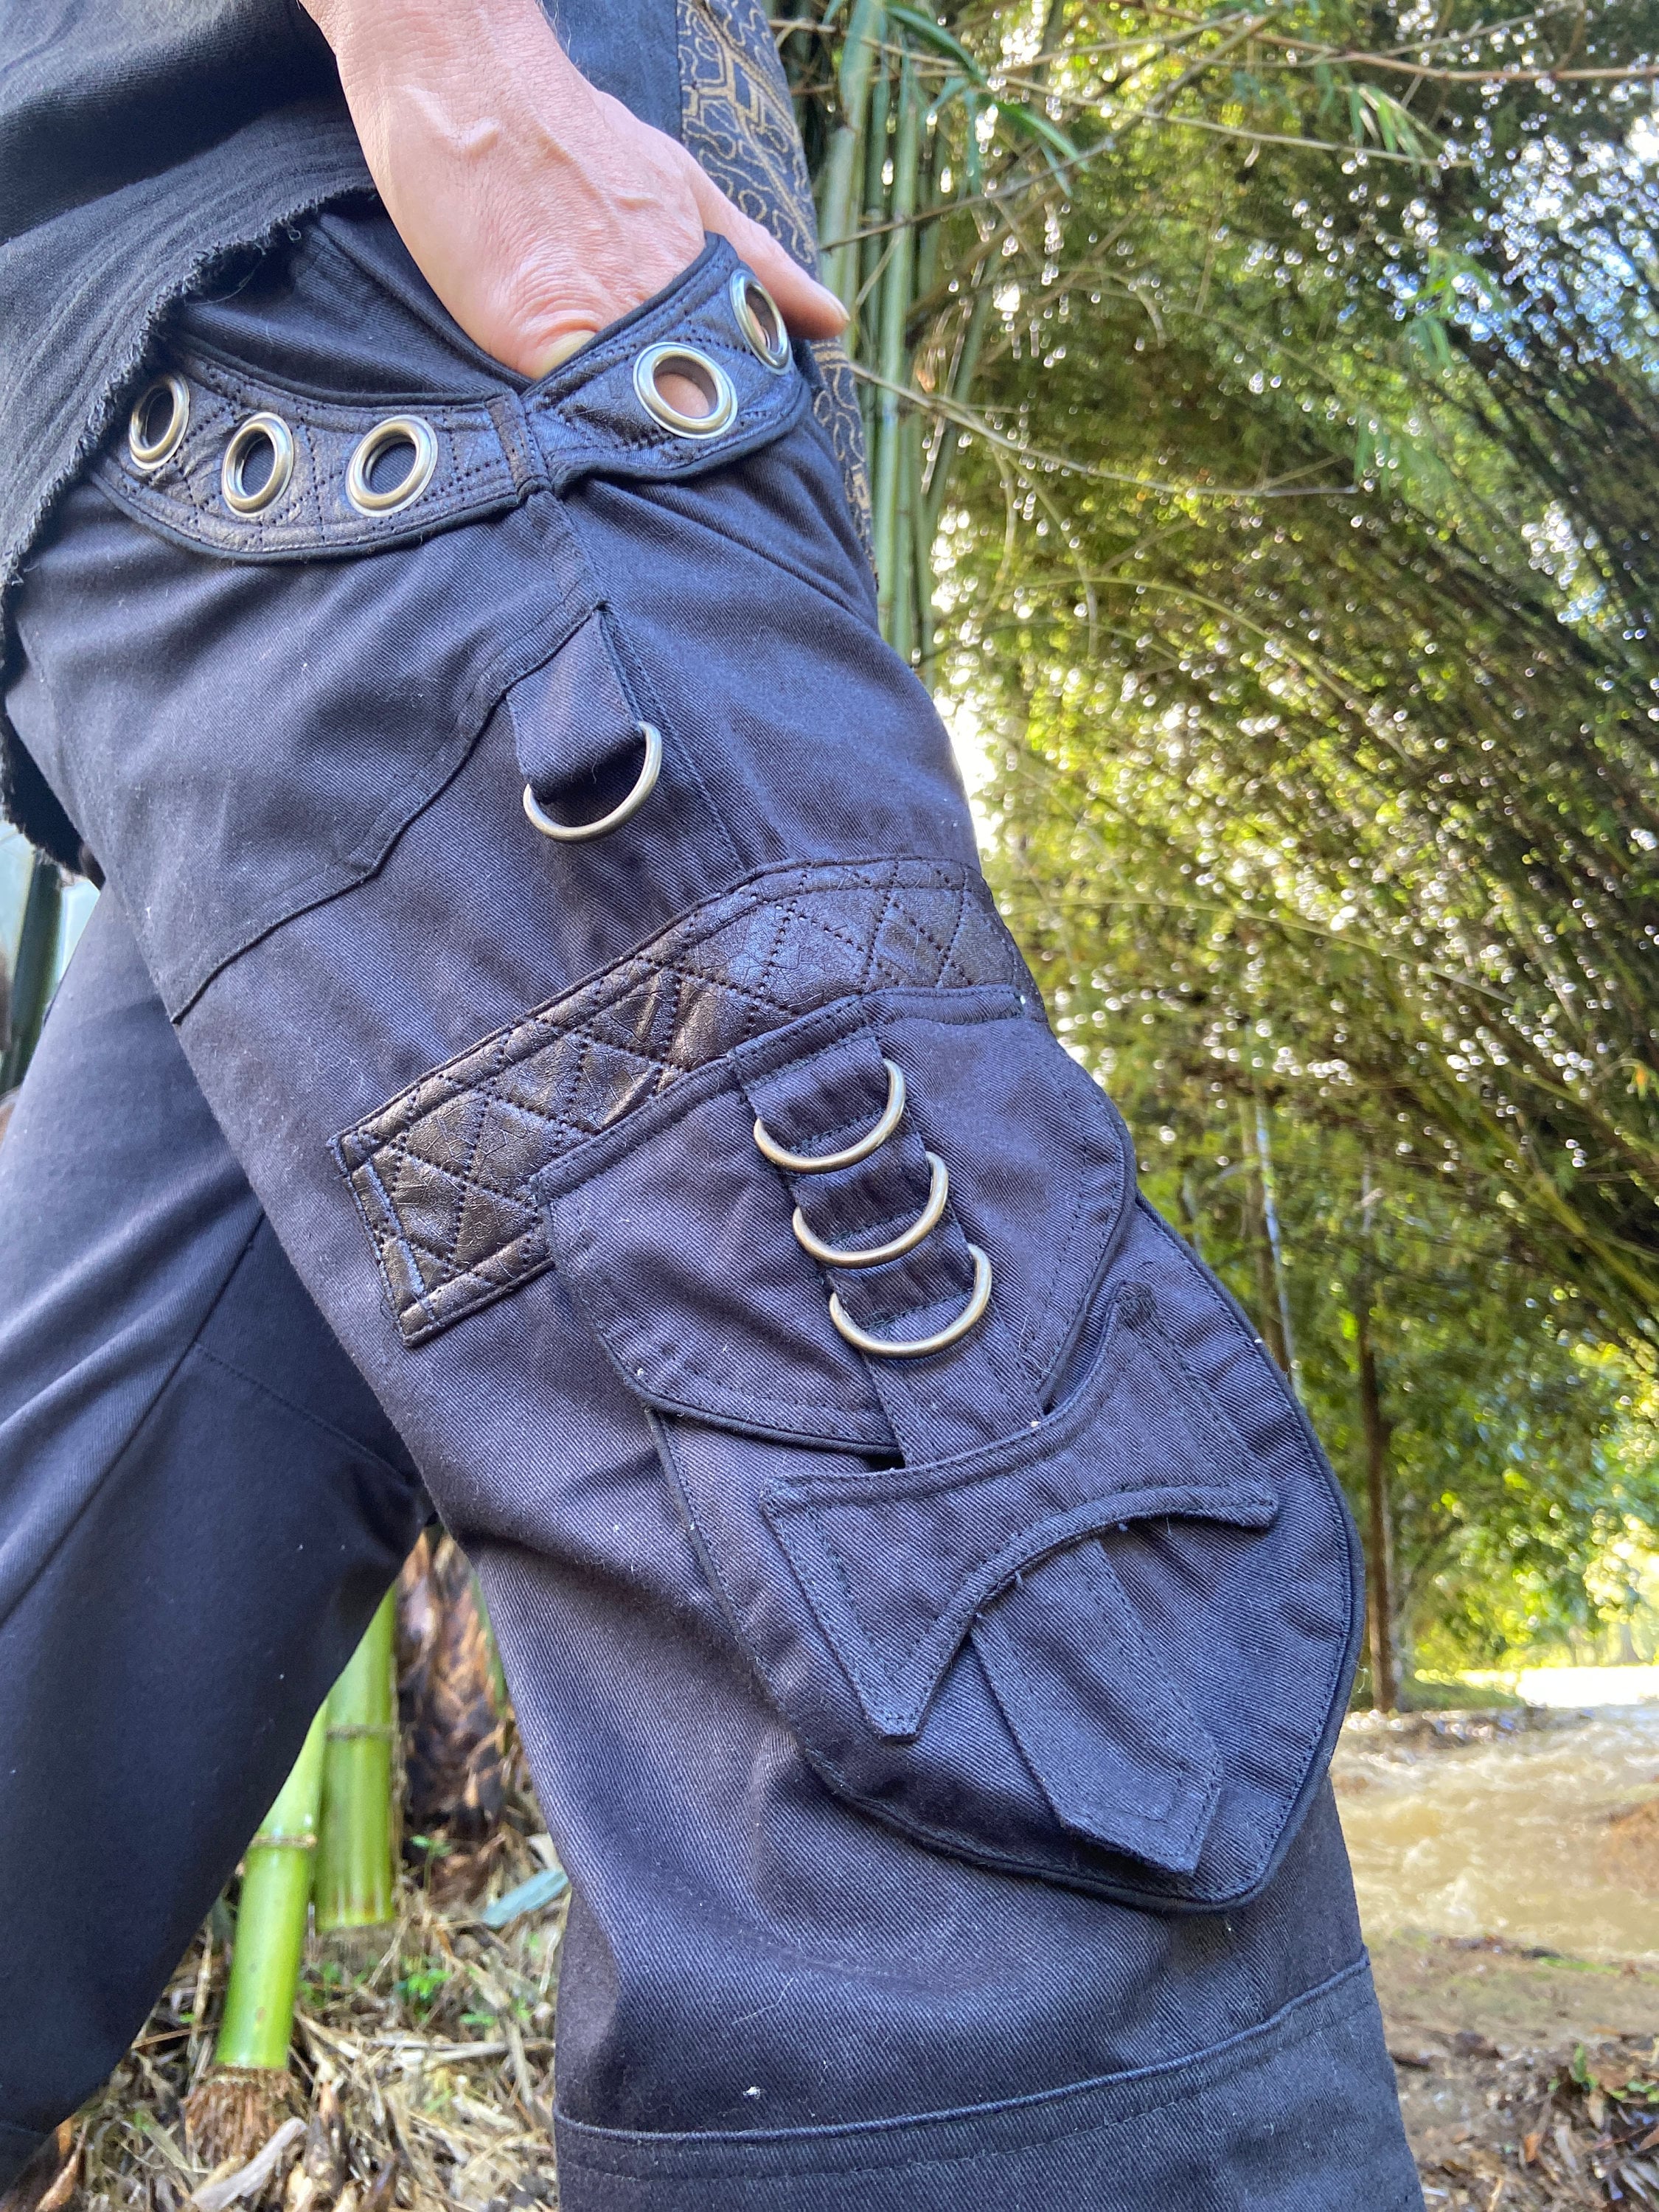 TRGPSG Men's Cargo Pants with 8 Pockets Cotton Cargo Work Pants(No  Belt),Khaki 30x31 - Walmart.com